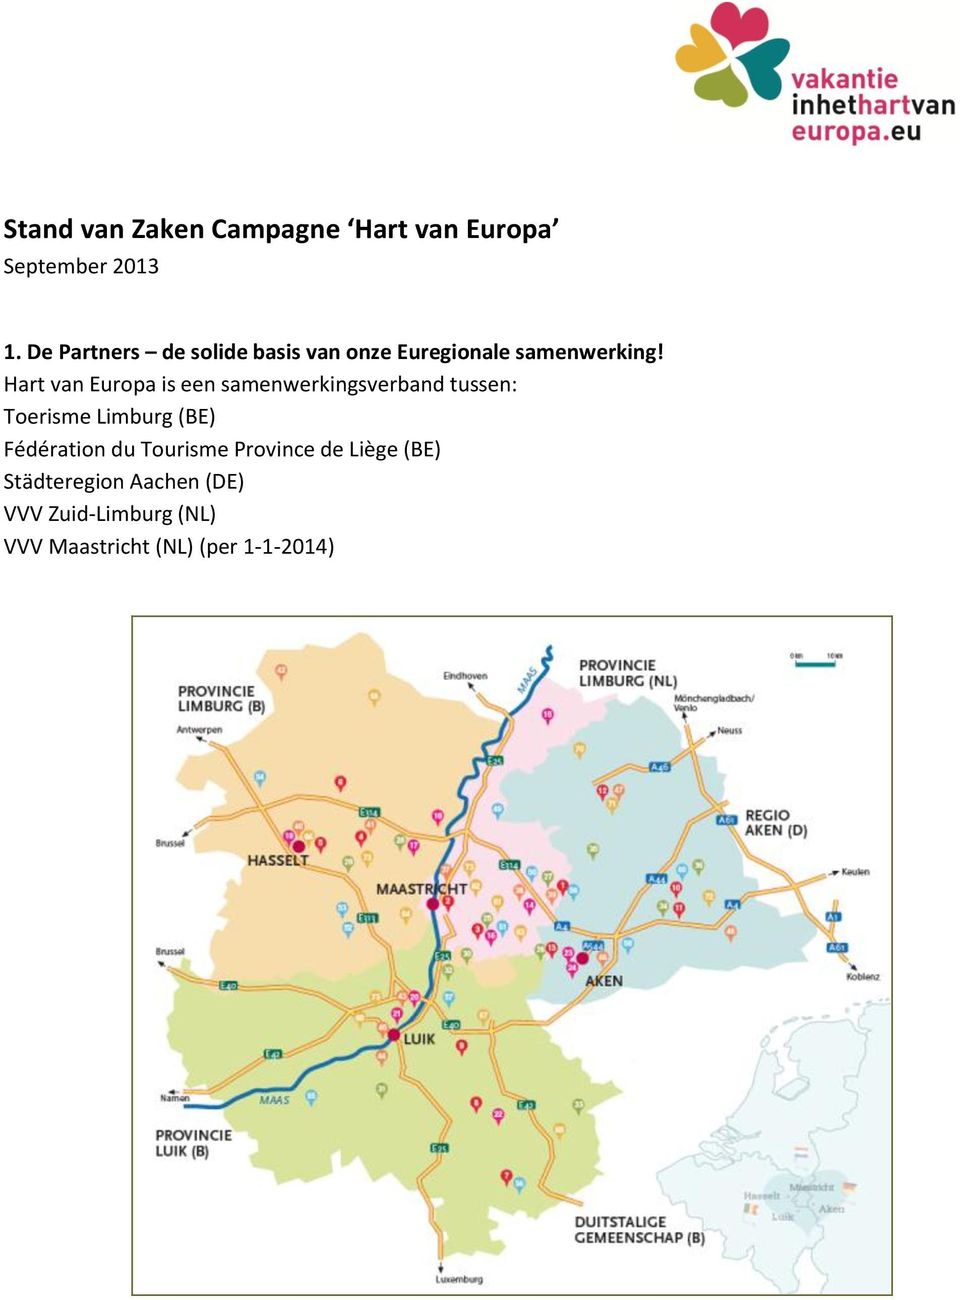 Hart van Europa is een samenwerkingsverband tussen: Toerisme Limburg (BE)